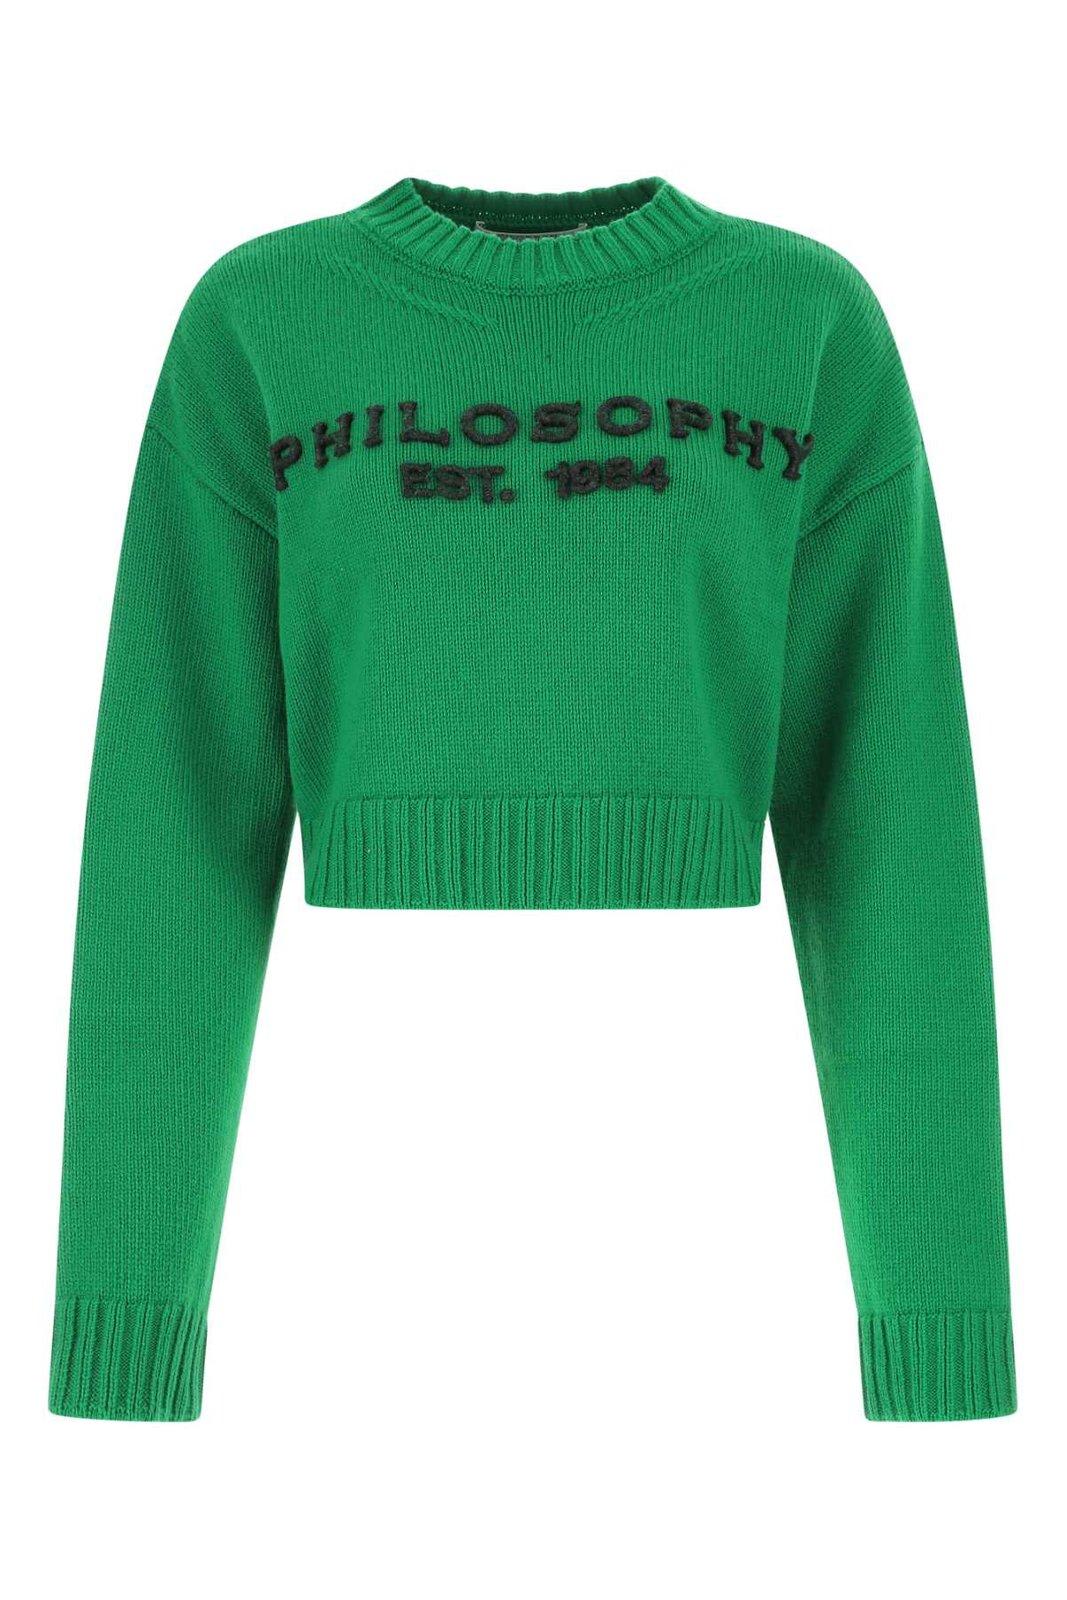 Philosophy di Lorenzo Serafini Logo Embroidered Cropped Sweater